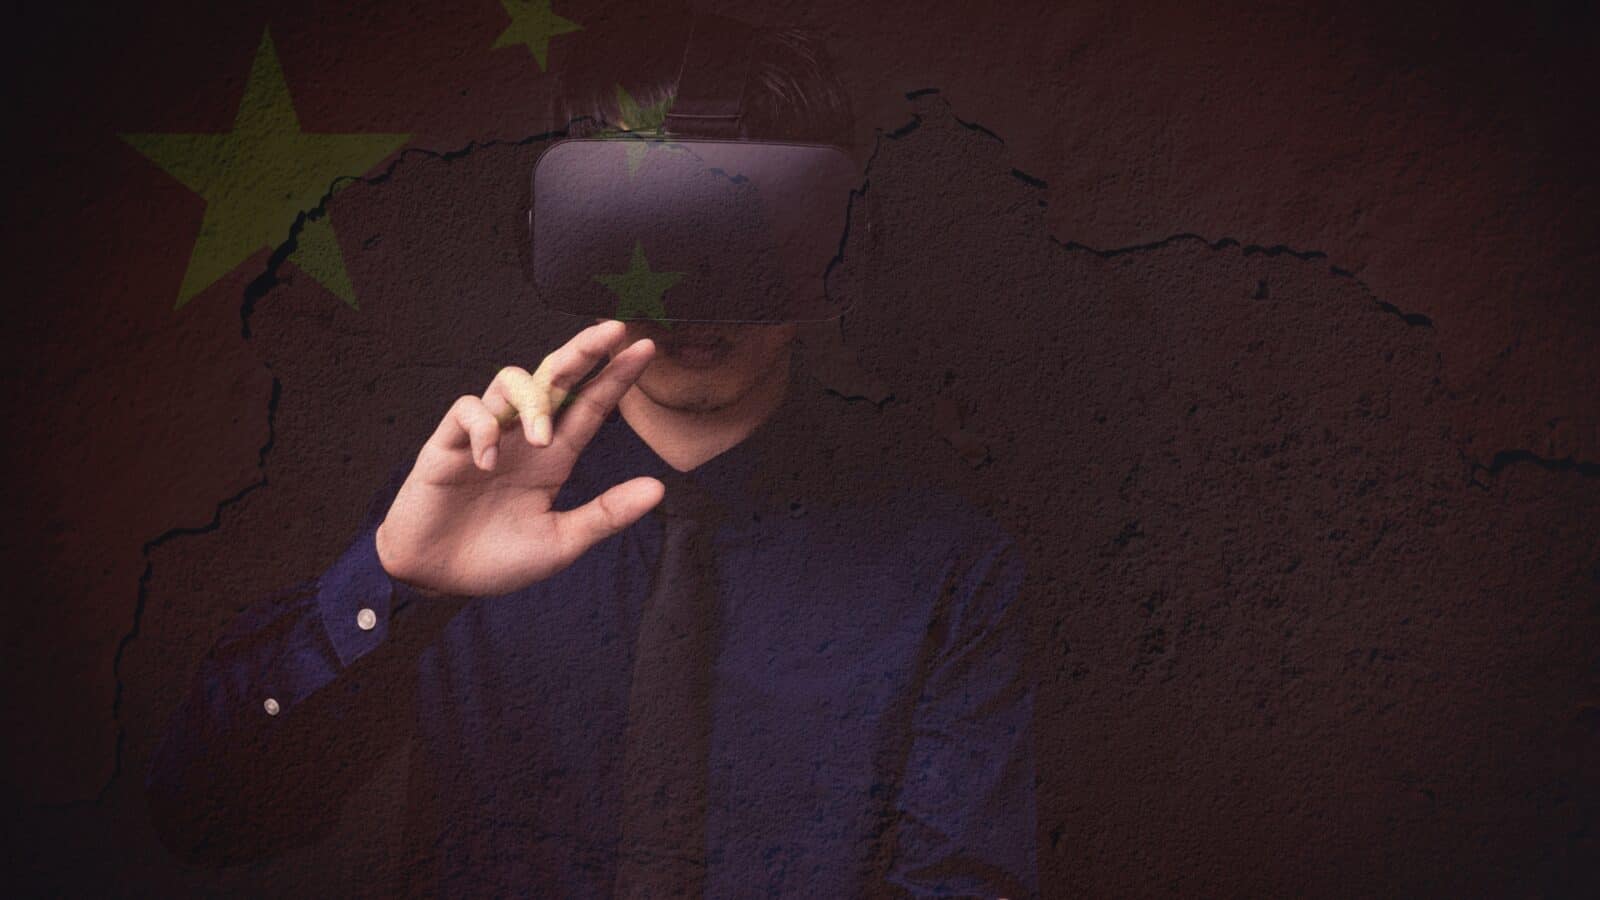 China to Launch Its Own Metaverse Platform